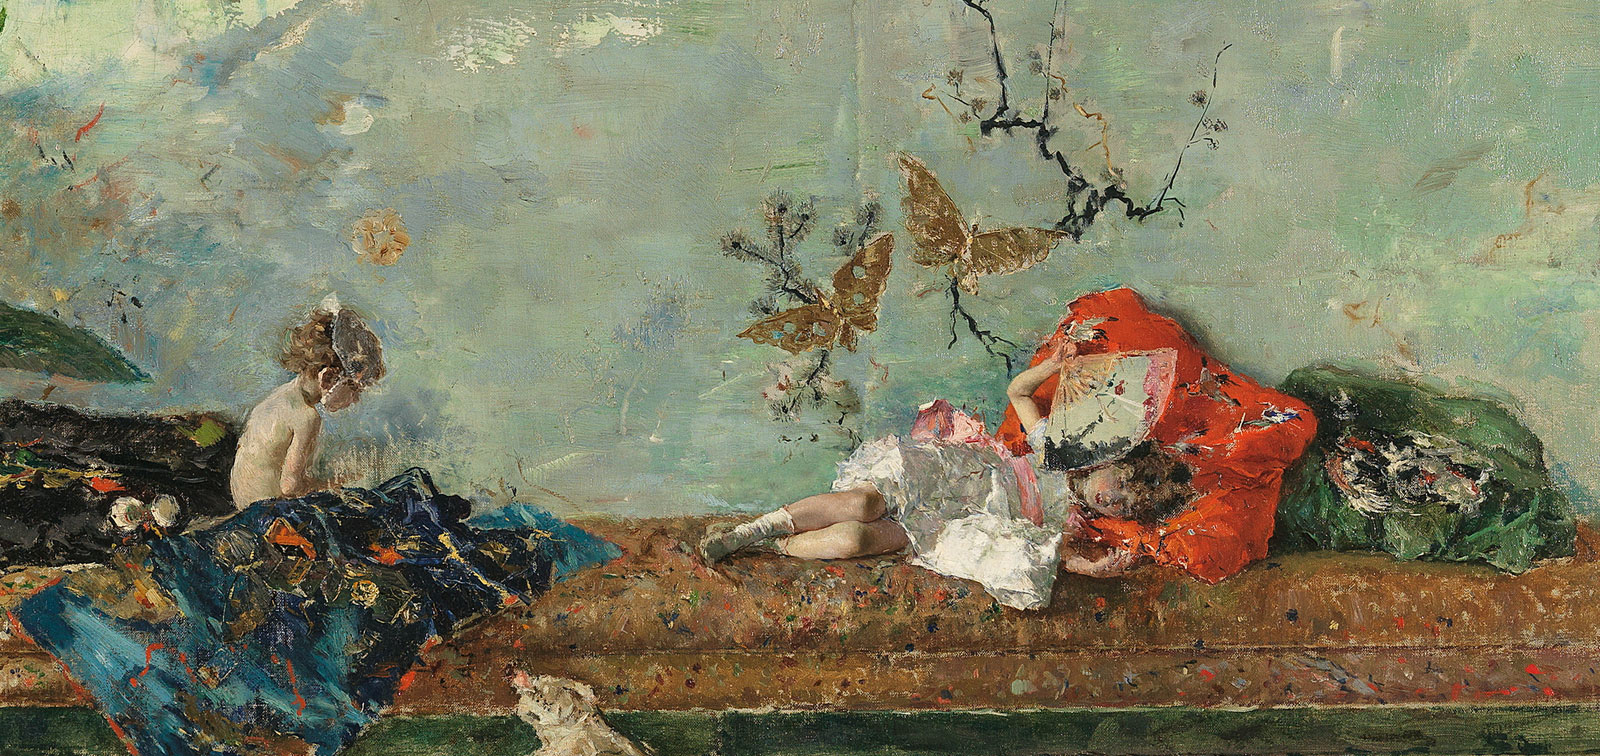 The 19th century in the Prado